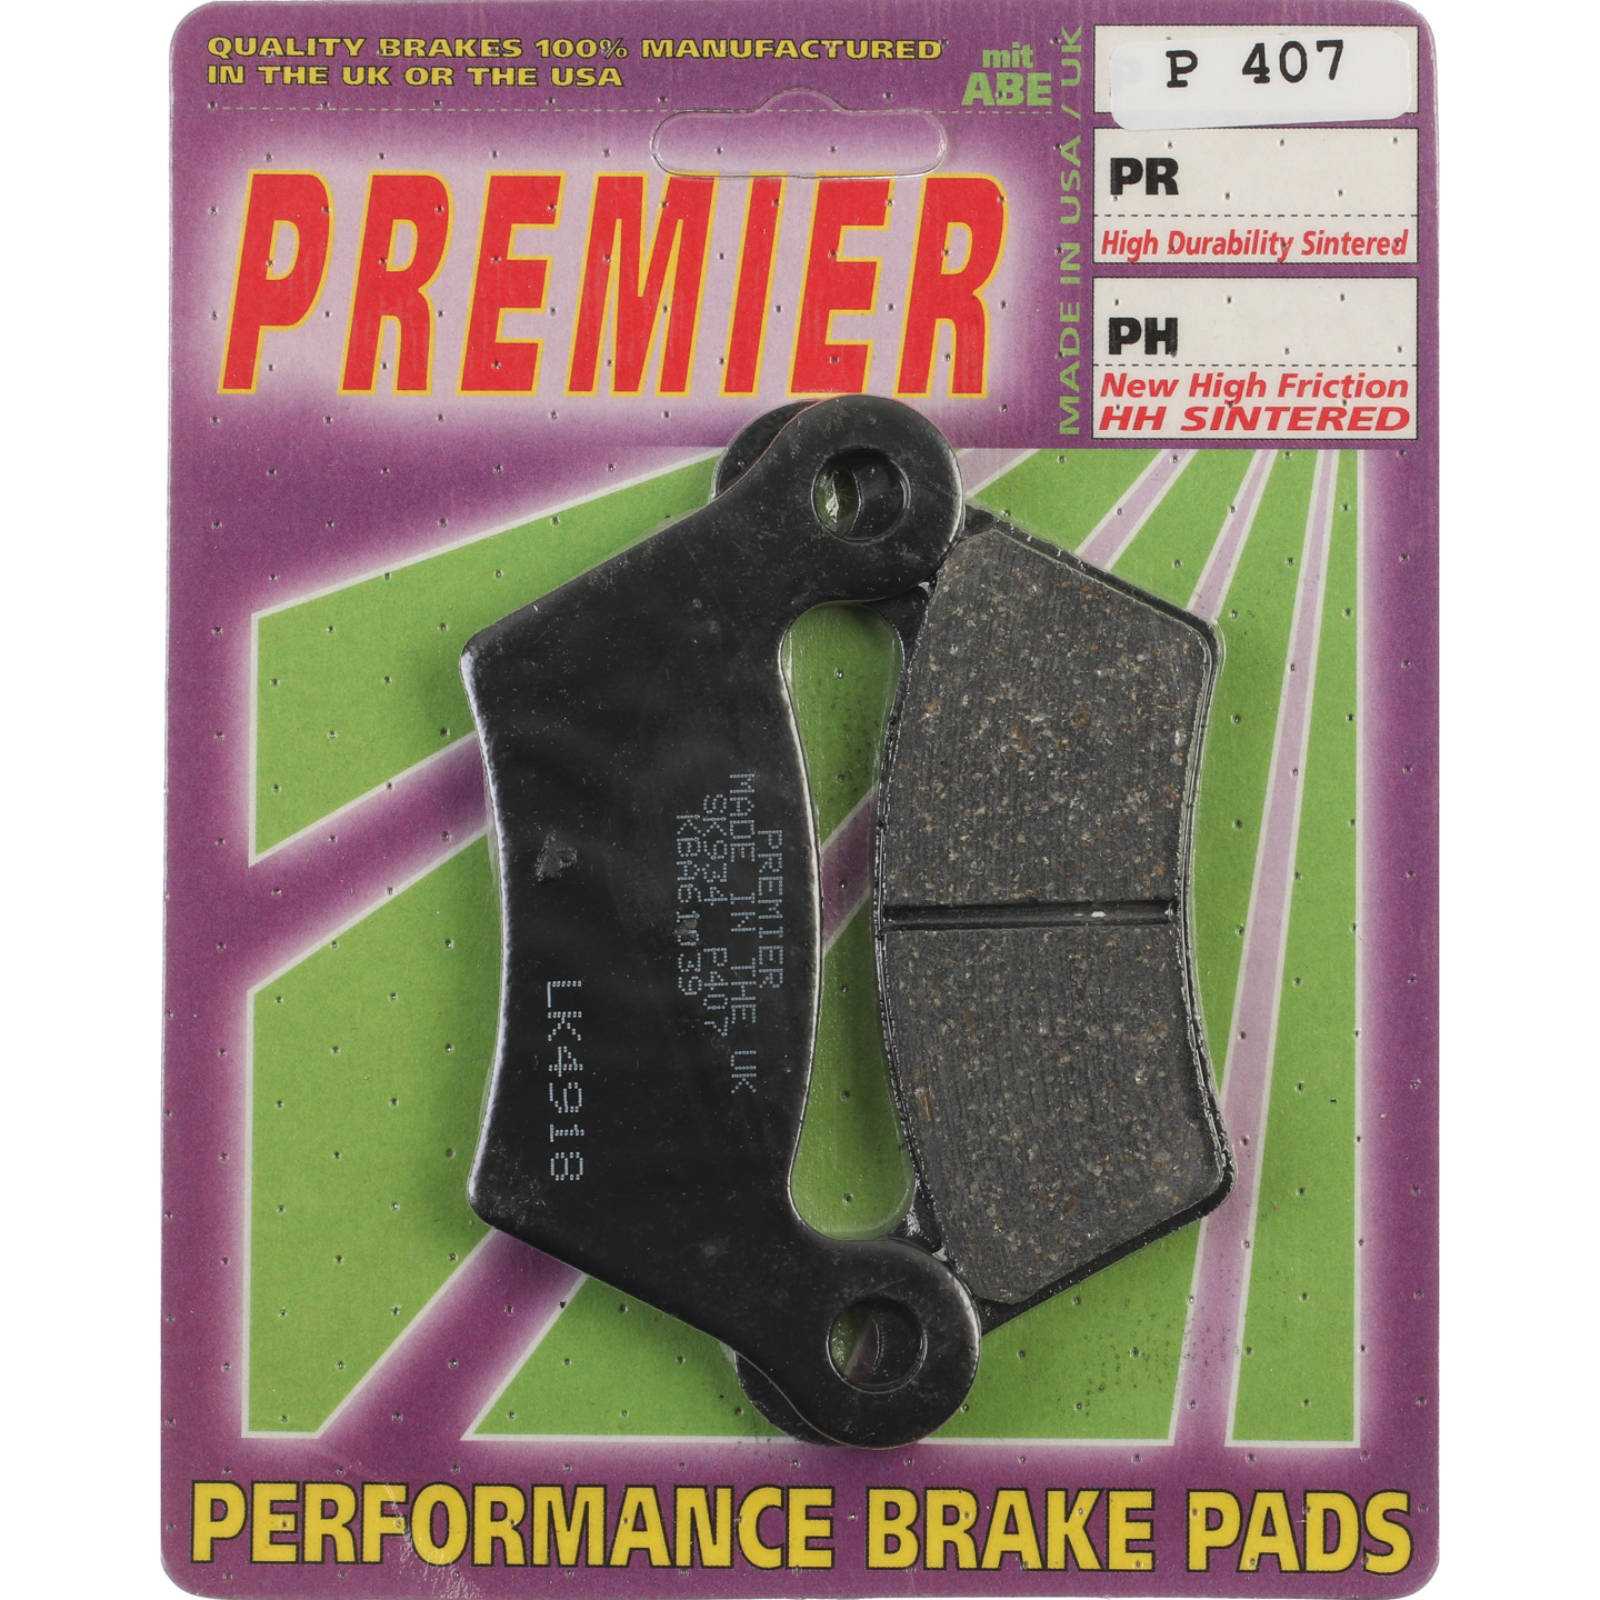 Premier, Premier Brake Pads - P Organic Standard